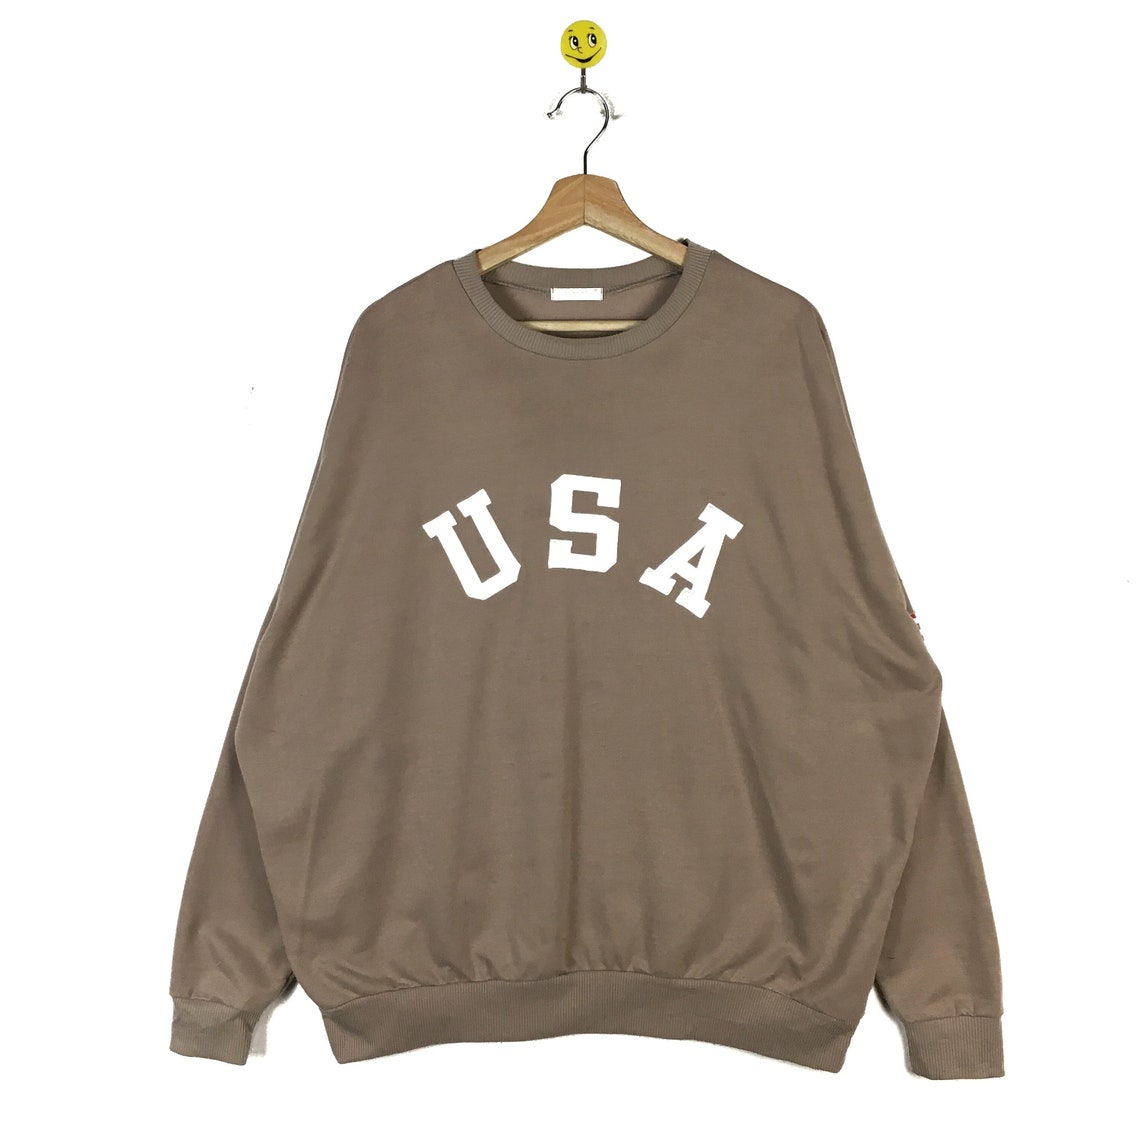 Rare USA Flag sweatshirt USA Flag pullover USA Flag sweater | Etsy